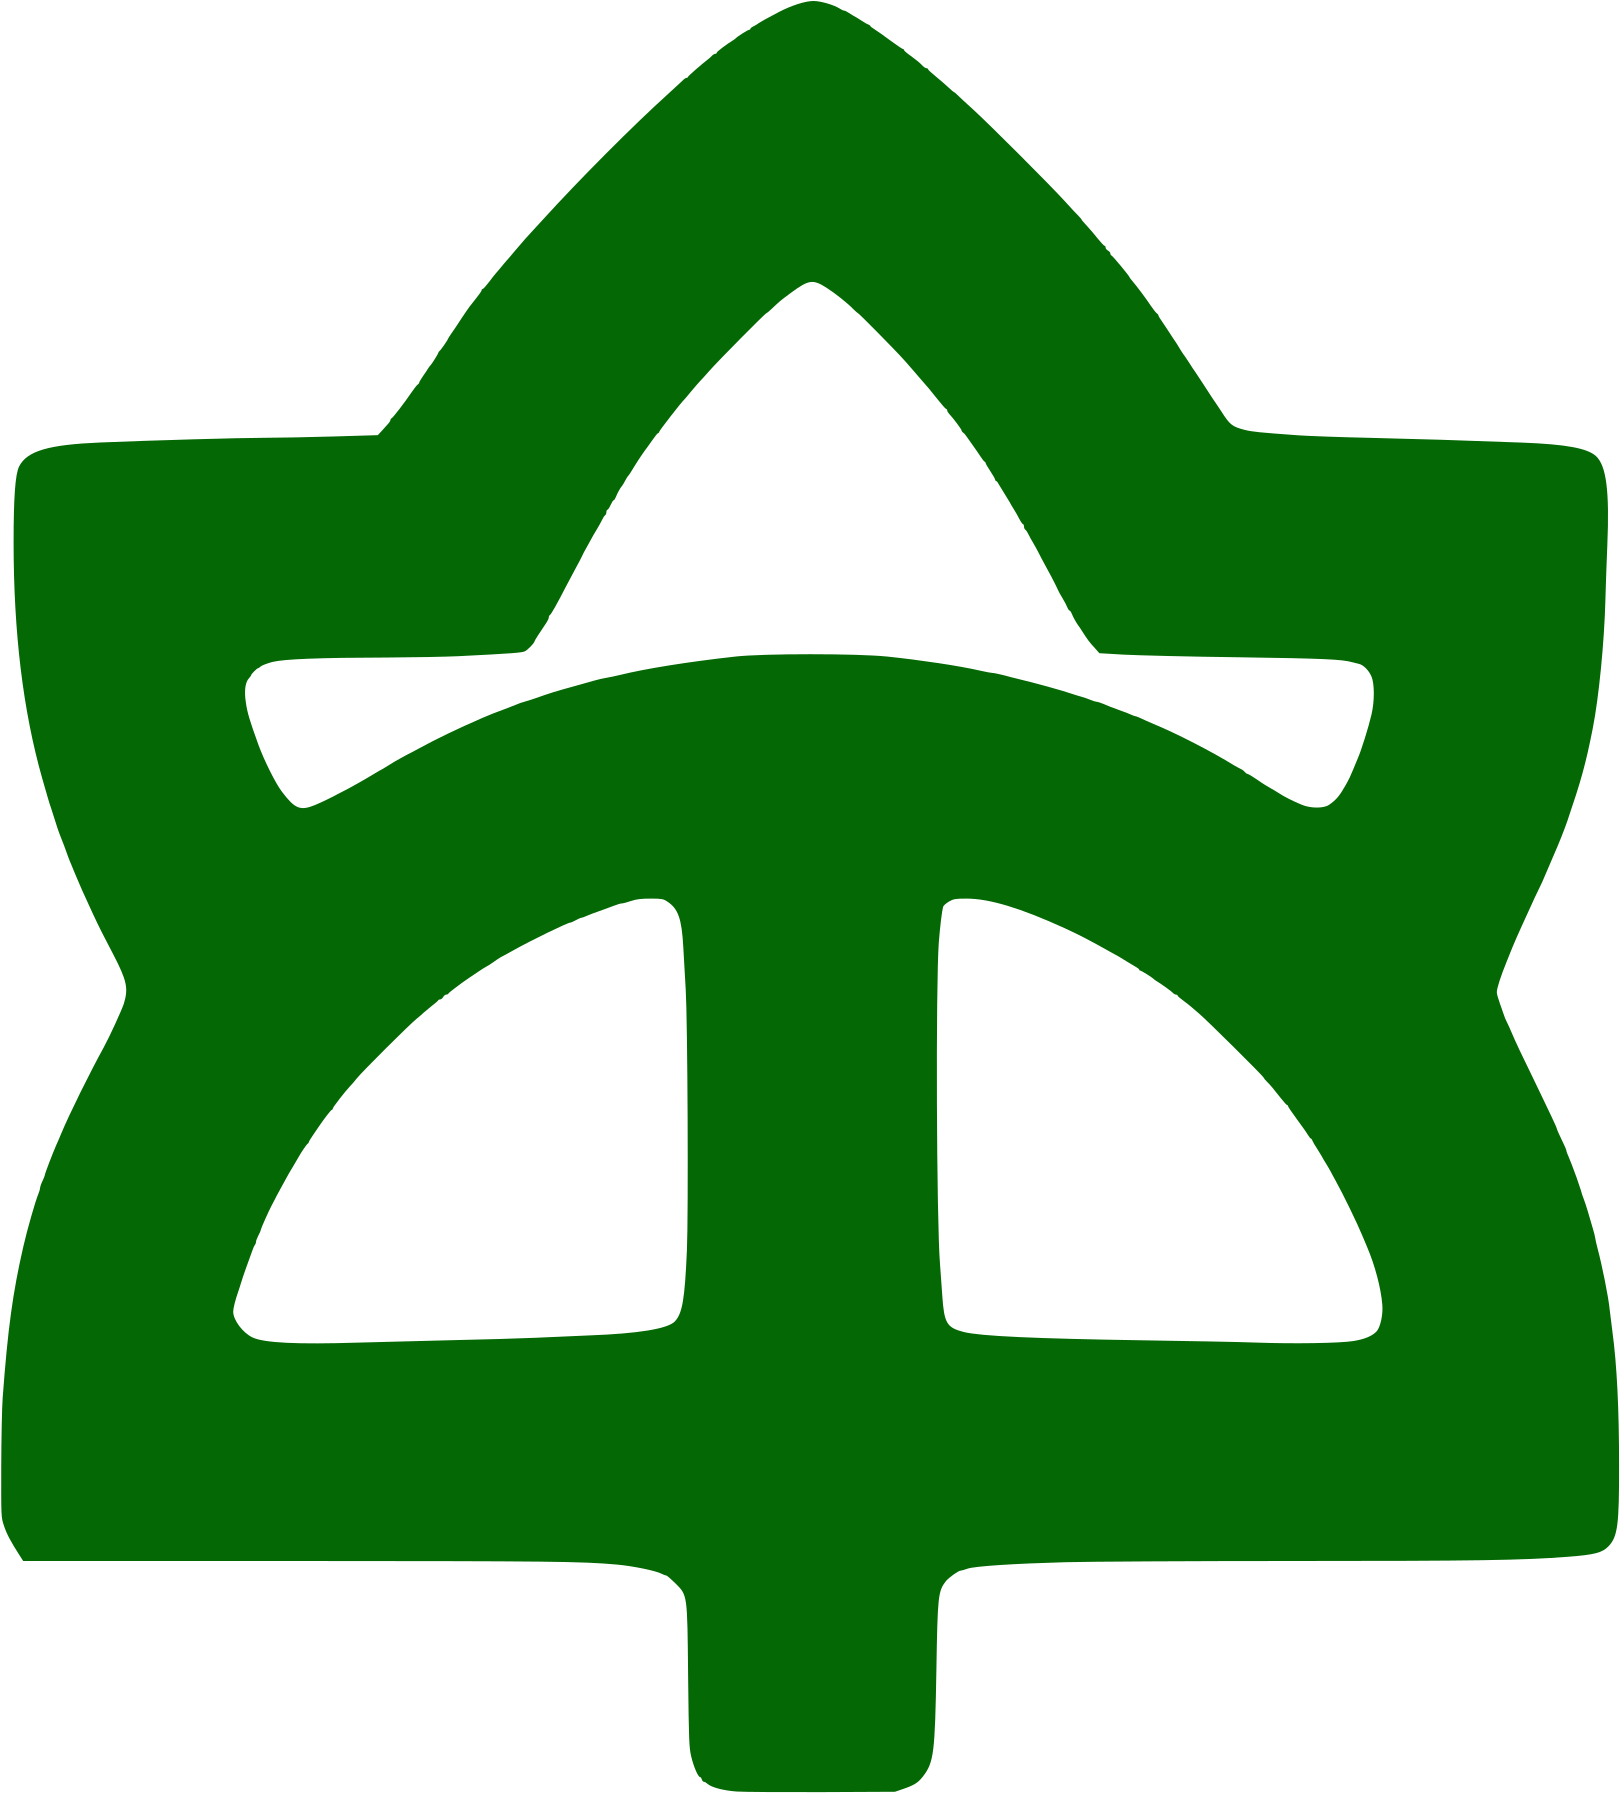 Social Credit Party Of Canada - Social Credit Party Logo (1920x1920)